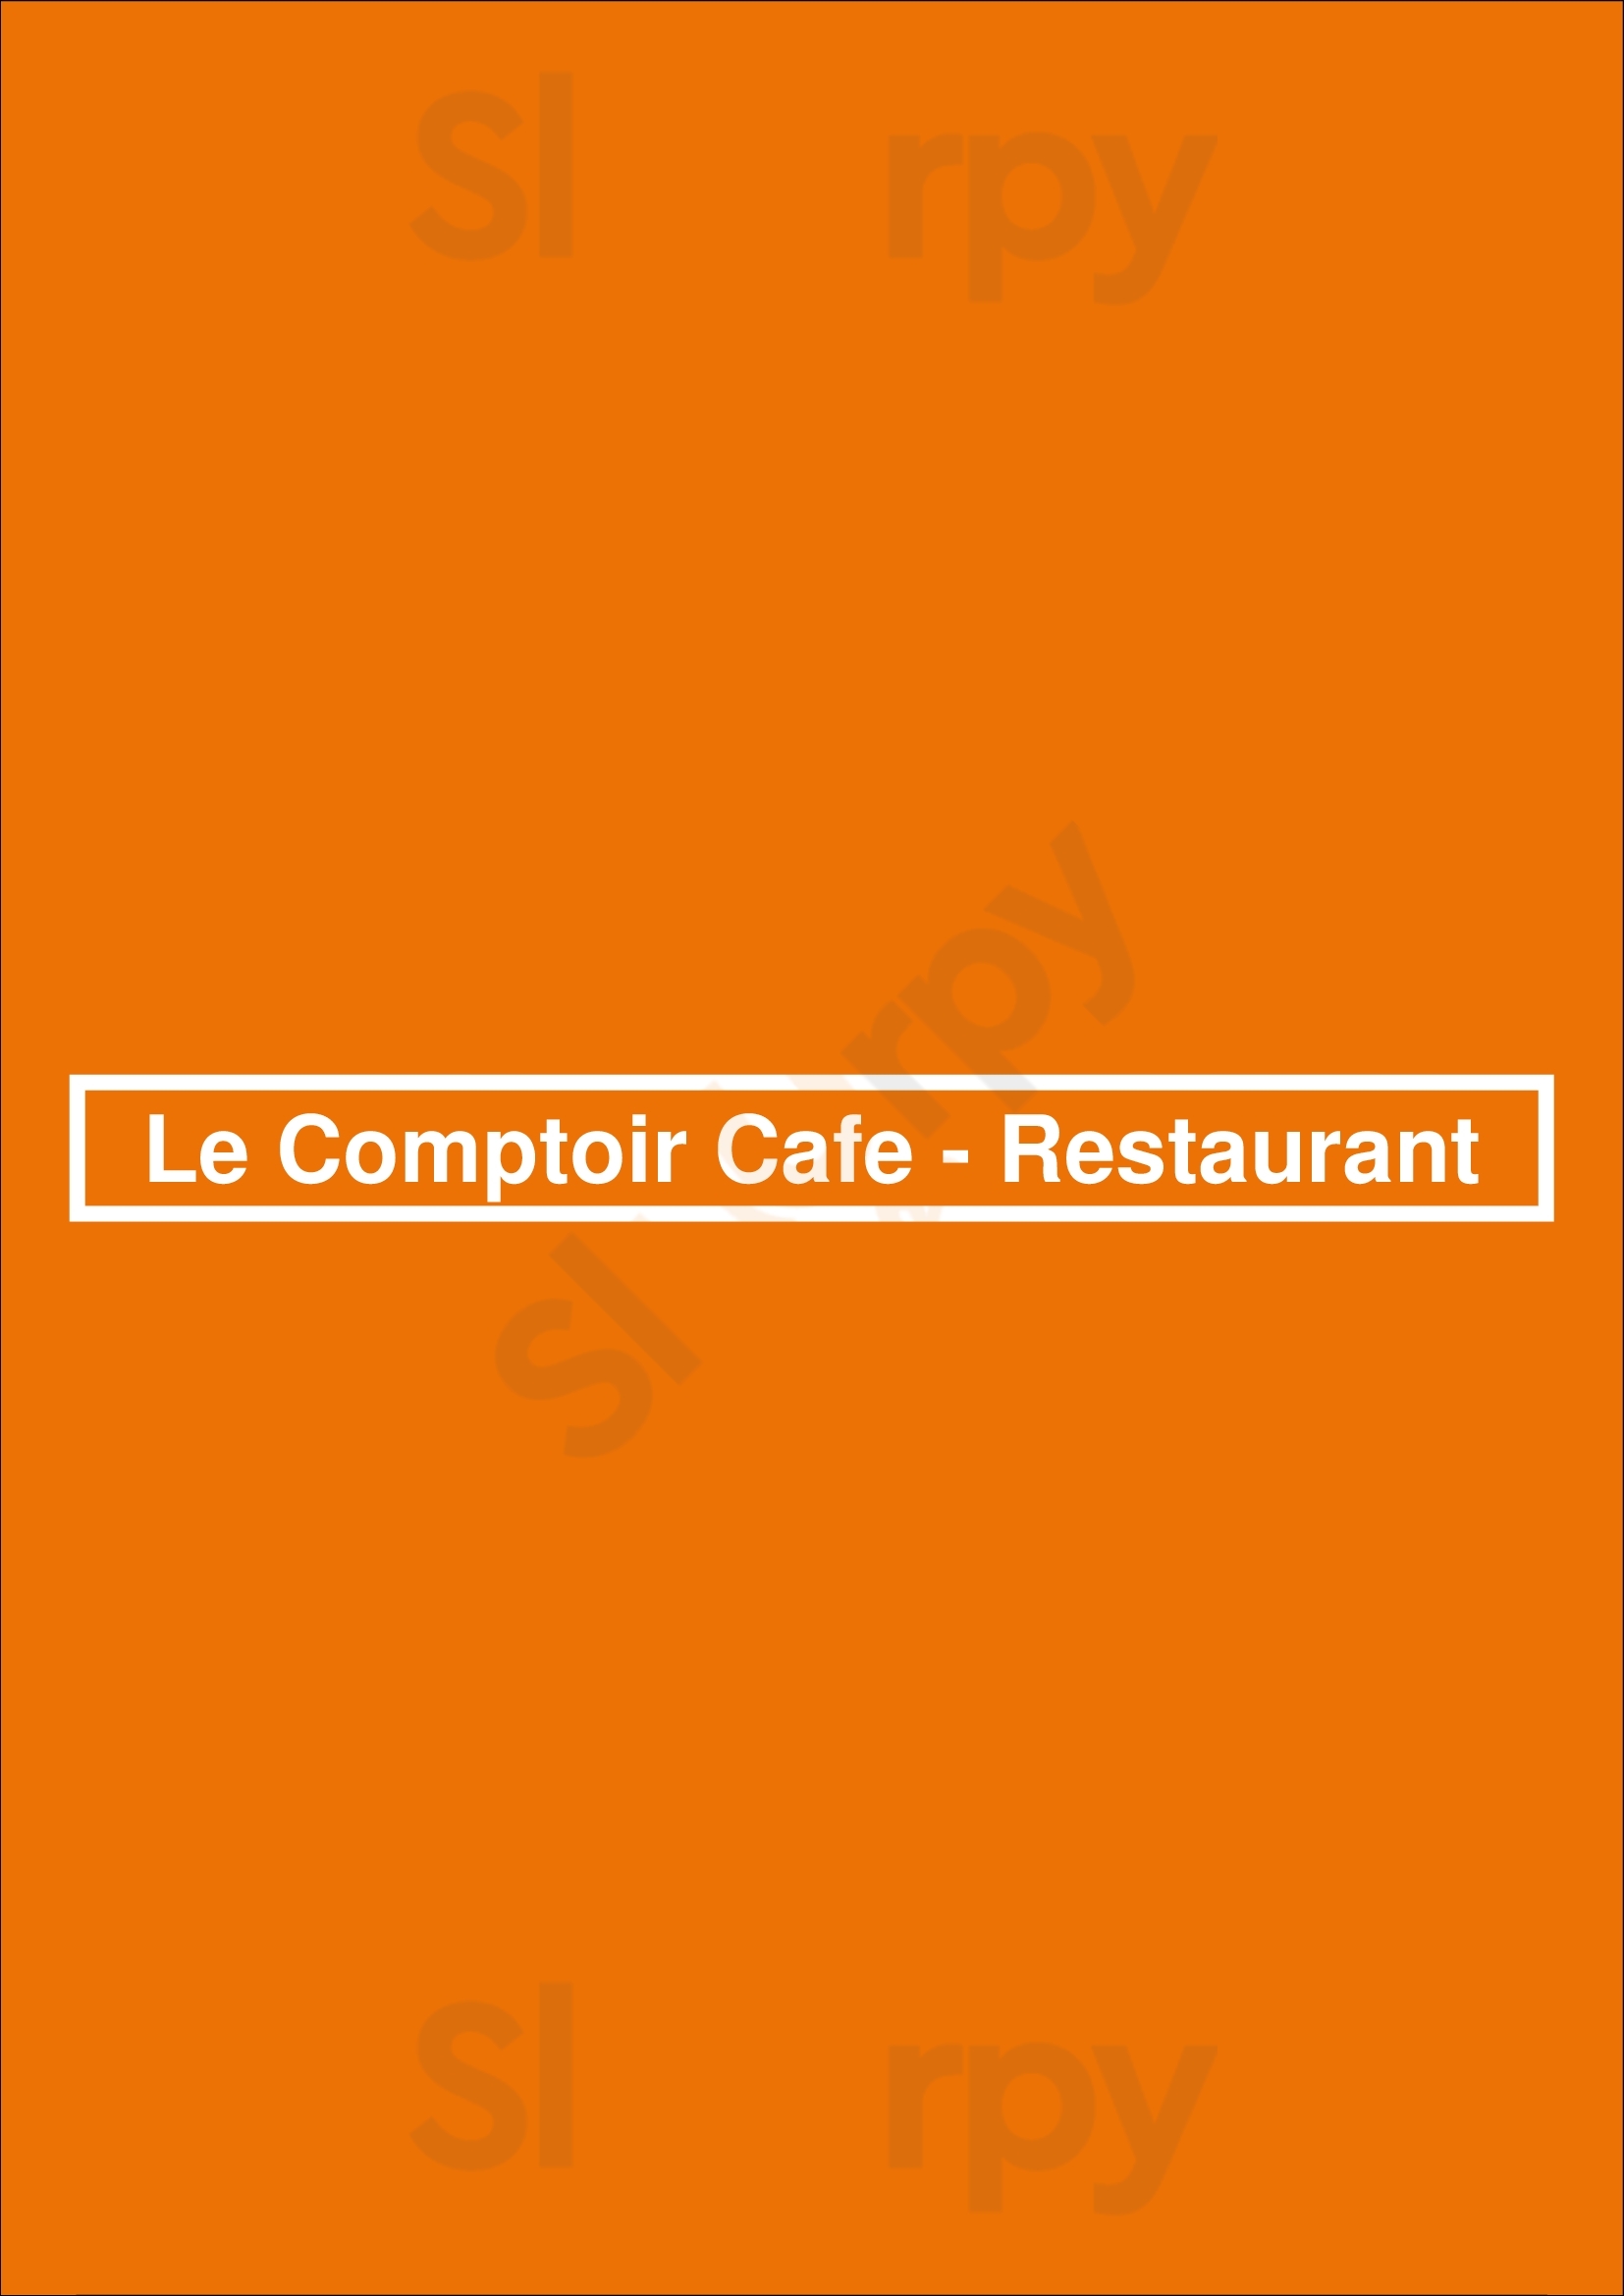 Le Comptoir Cafe - Restaurant Marseille Menu - 1